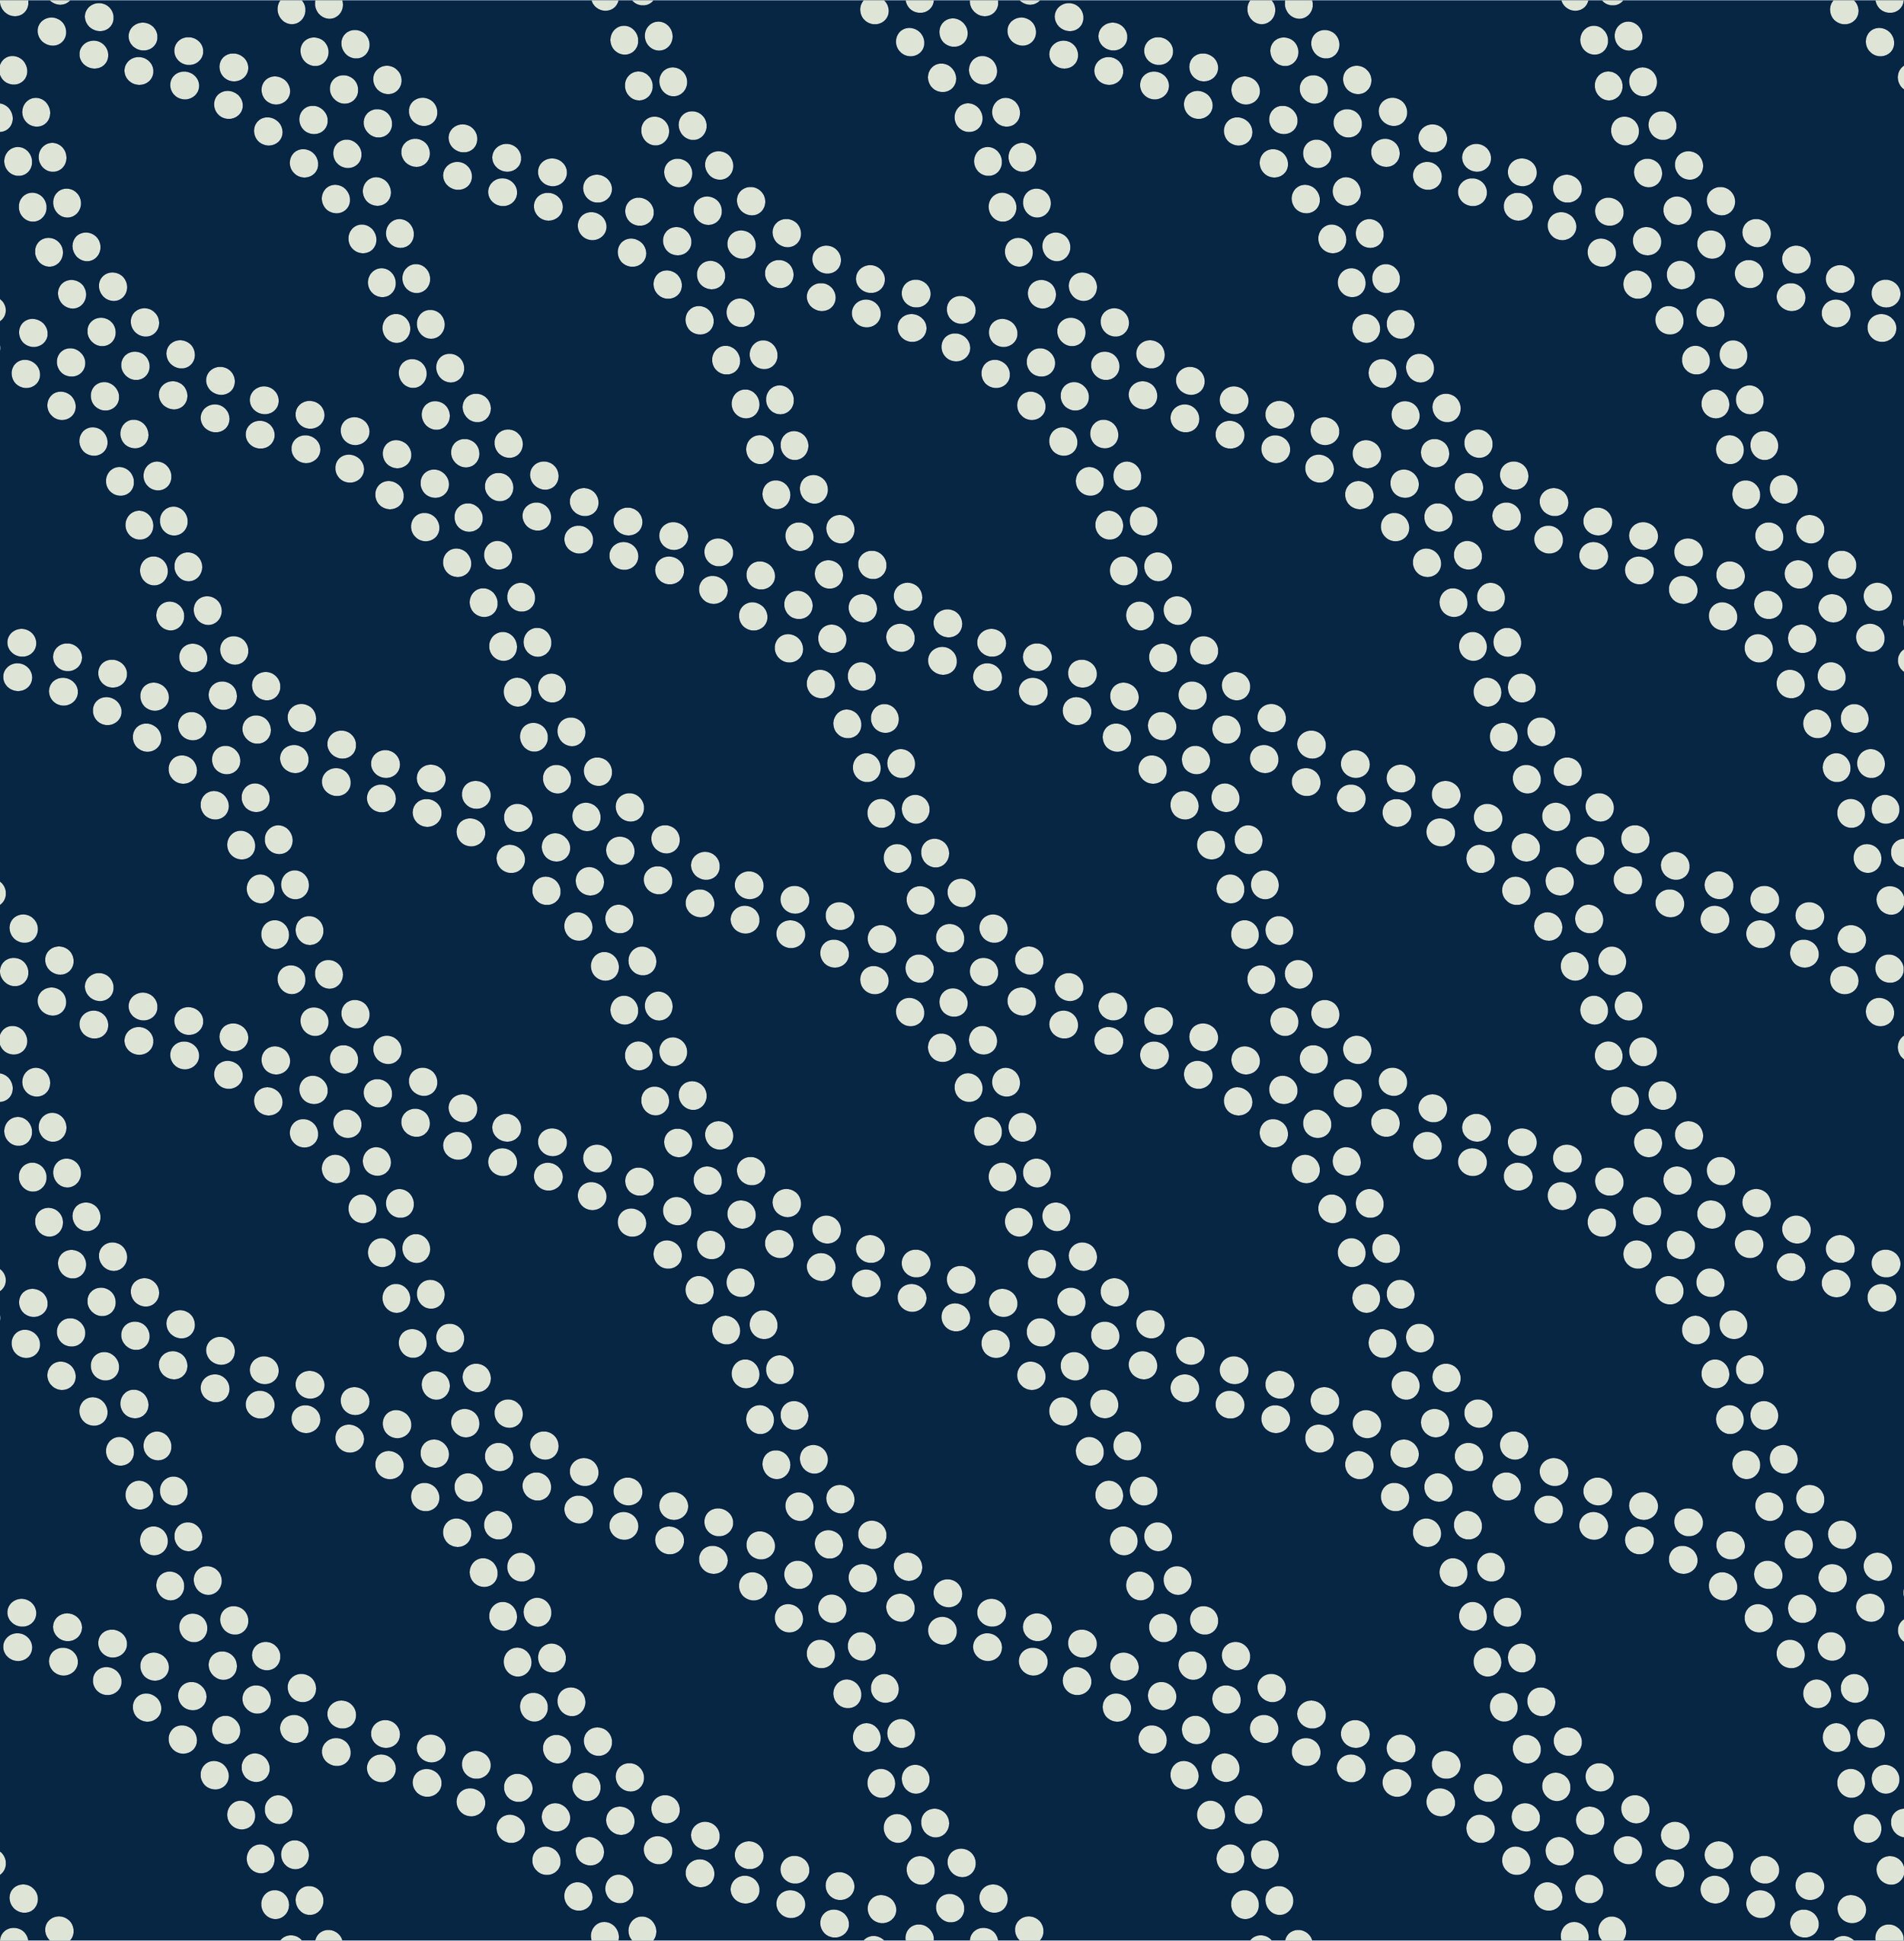 Duncan & Potts Law Firm Branding Wave Blue Pattern.jpg